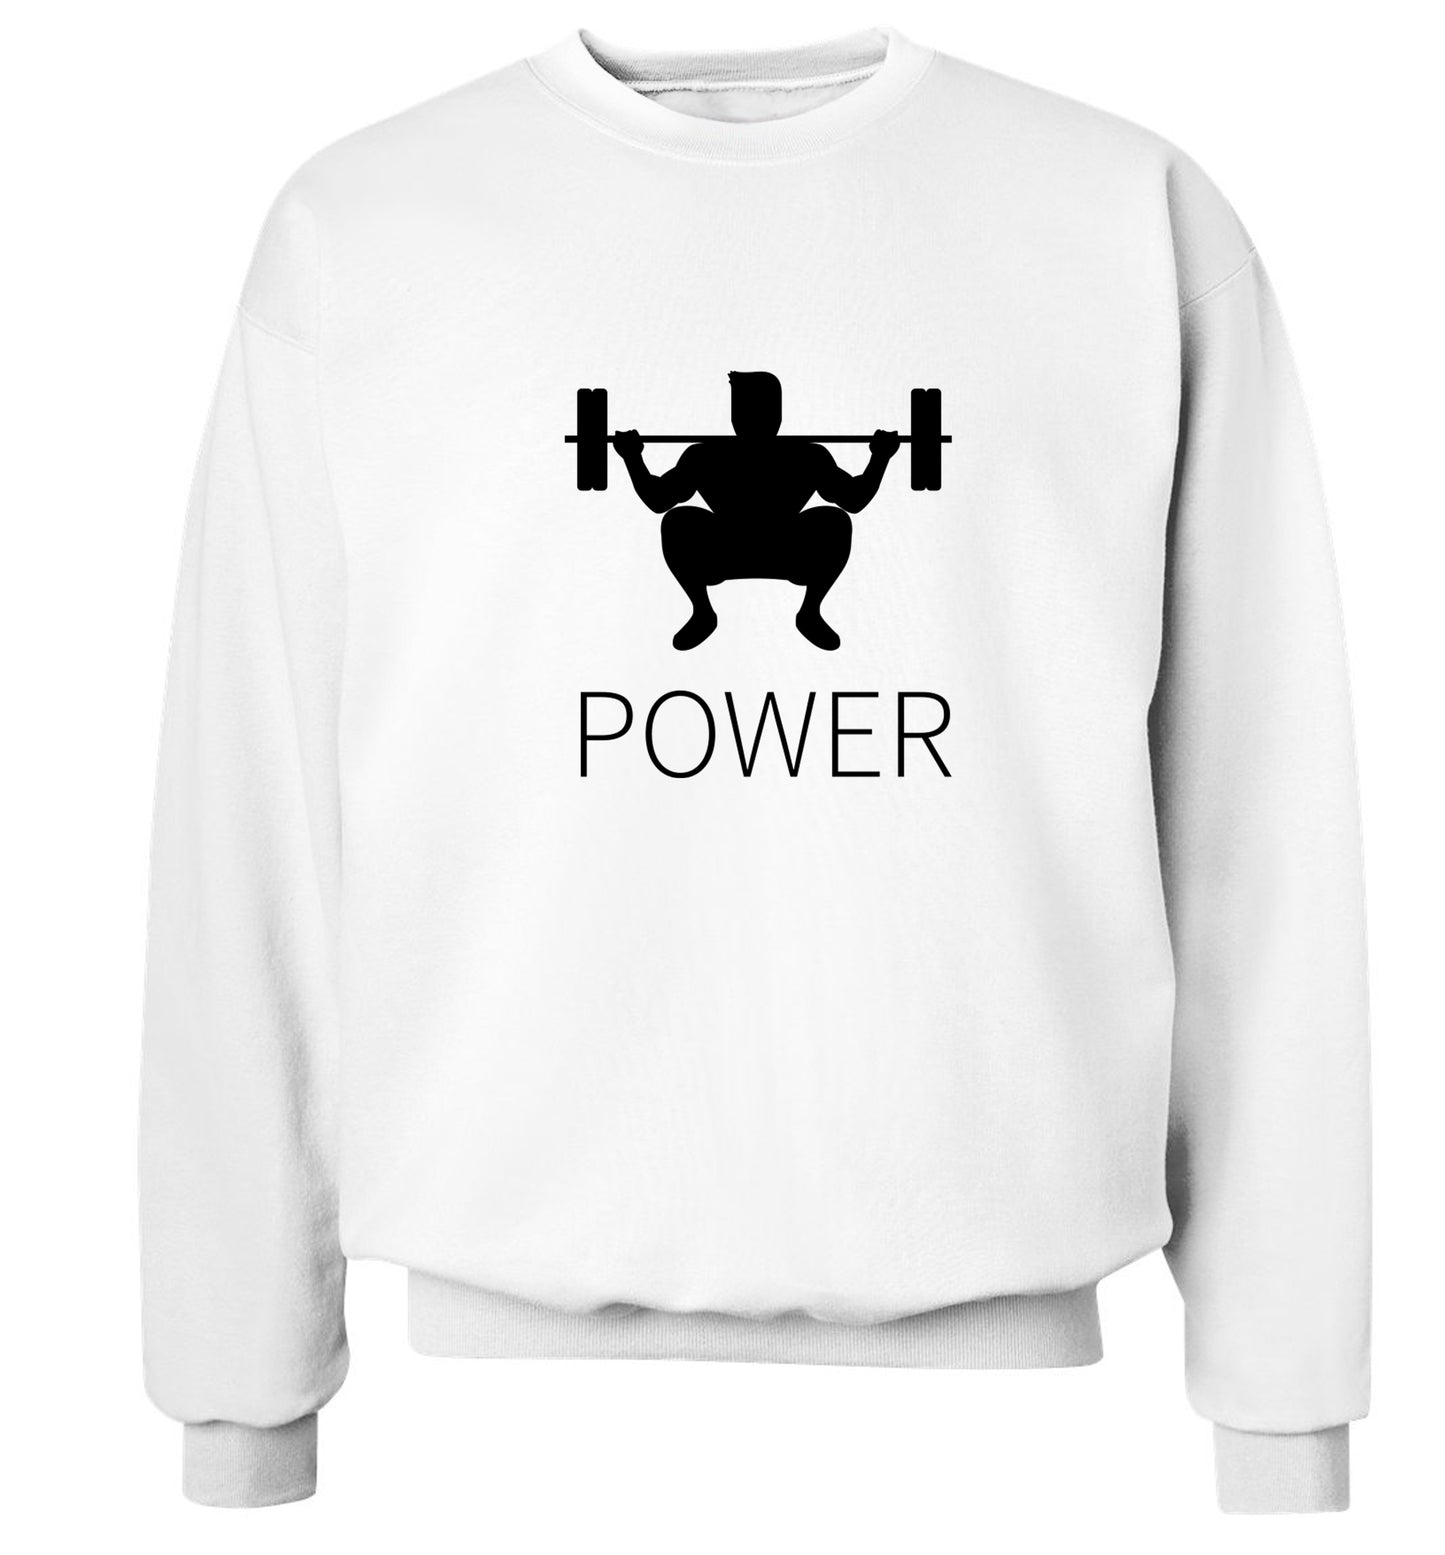 Lift power Adult's unisex white Sweater 2XL